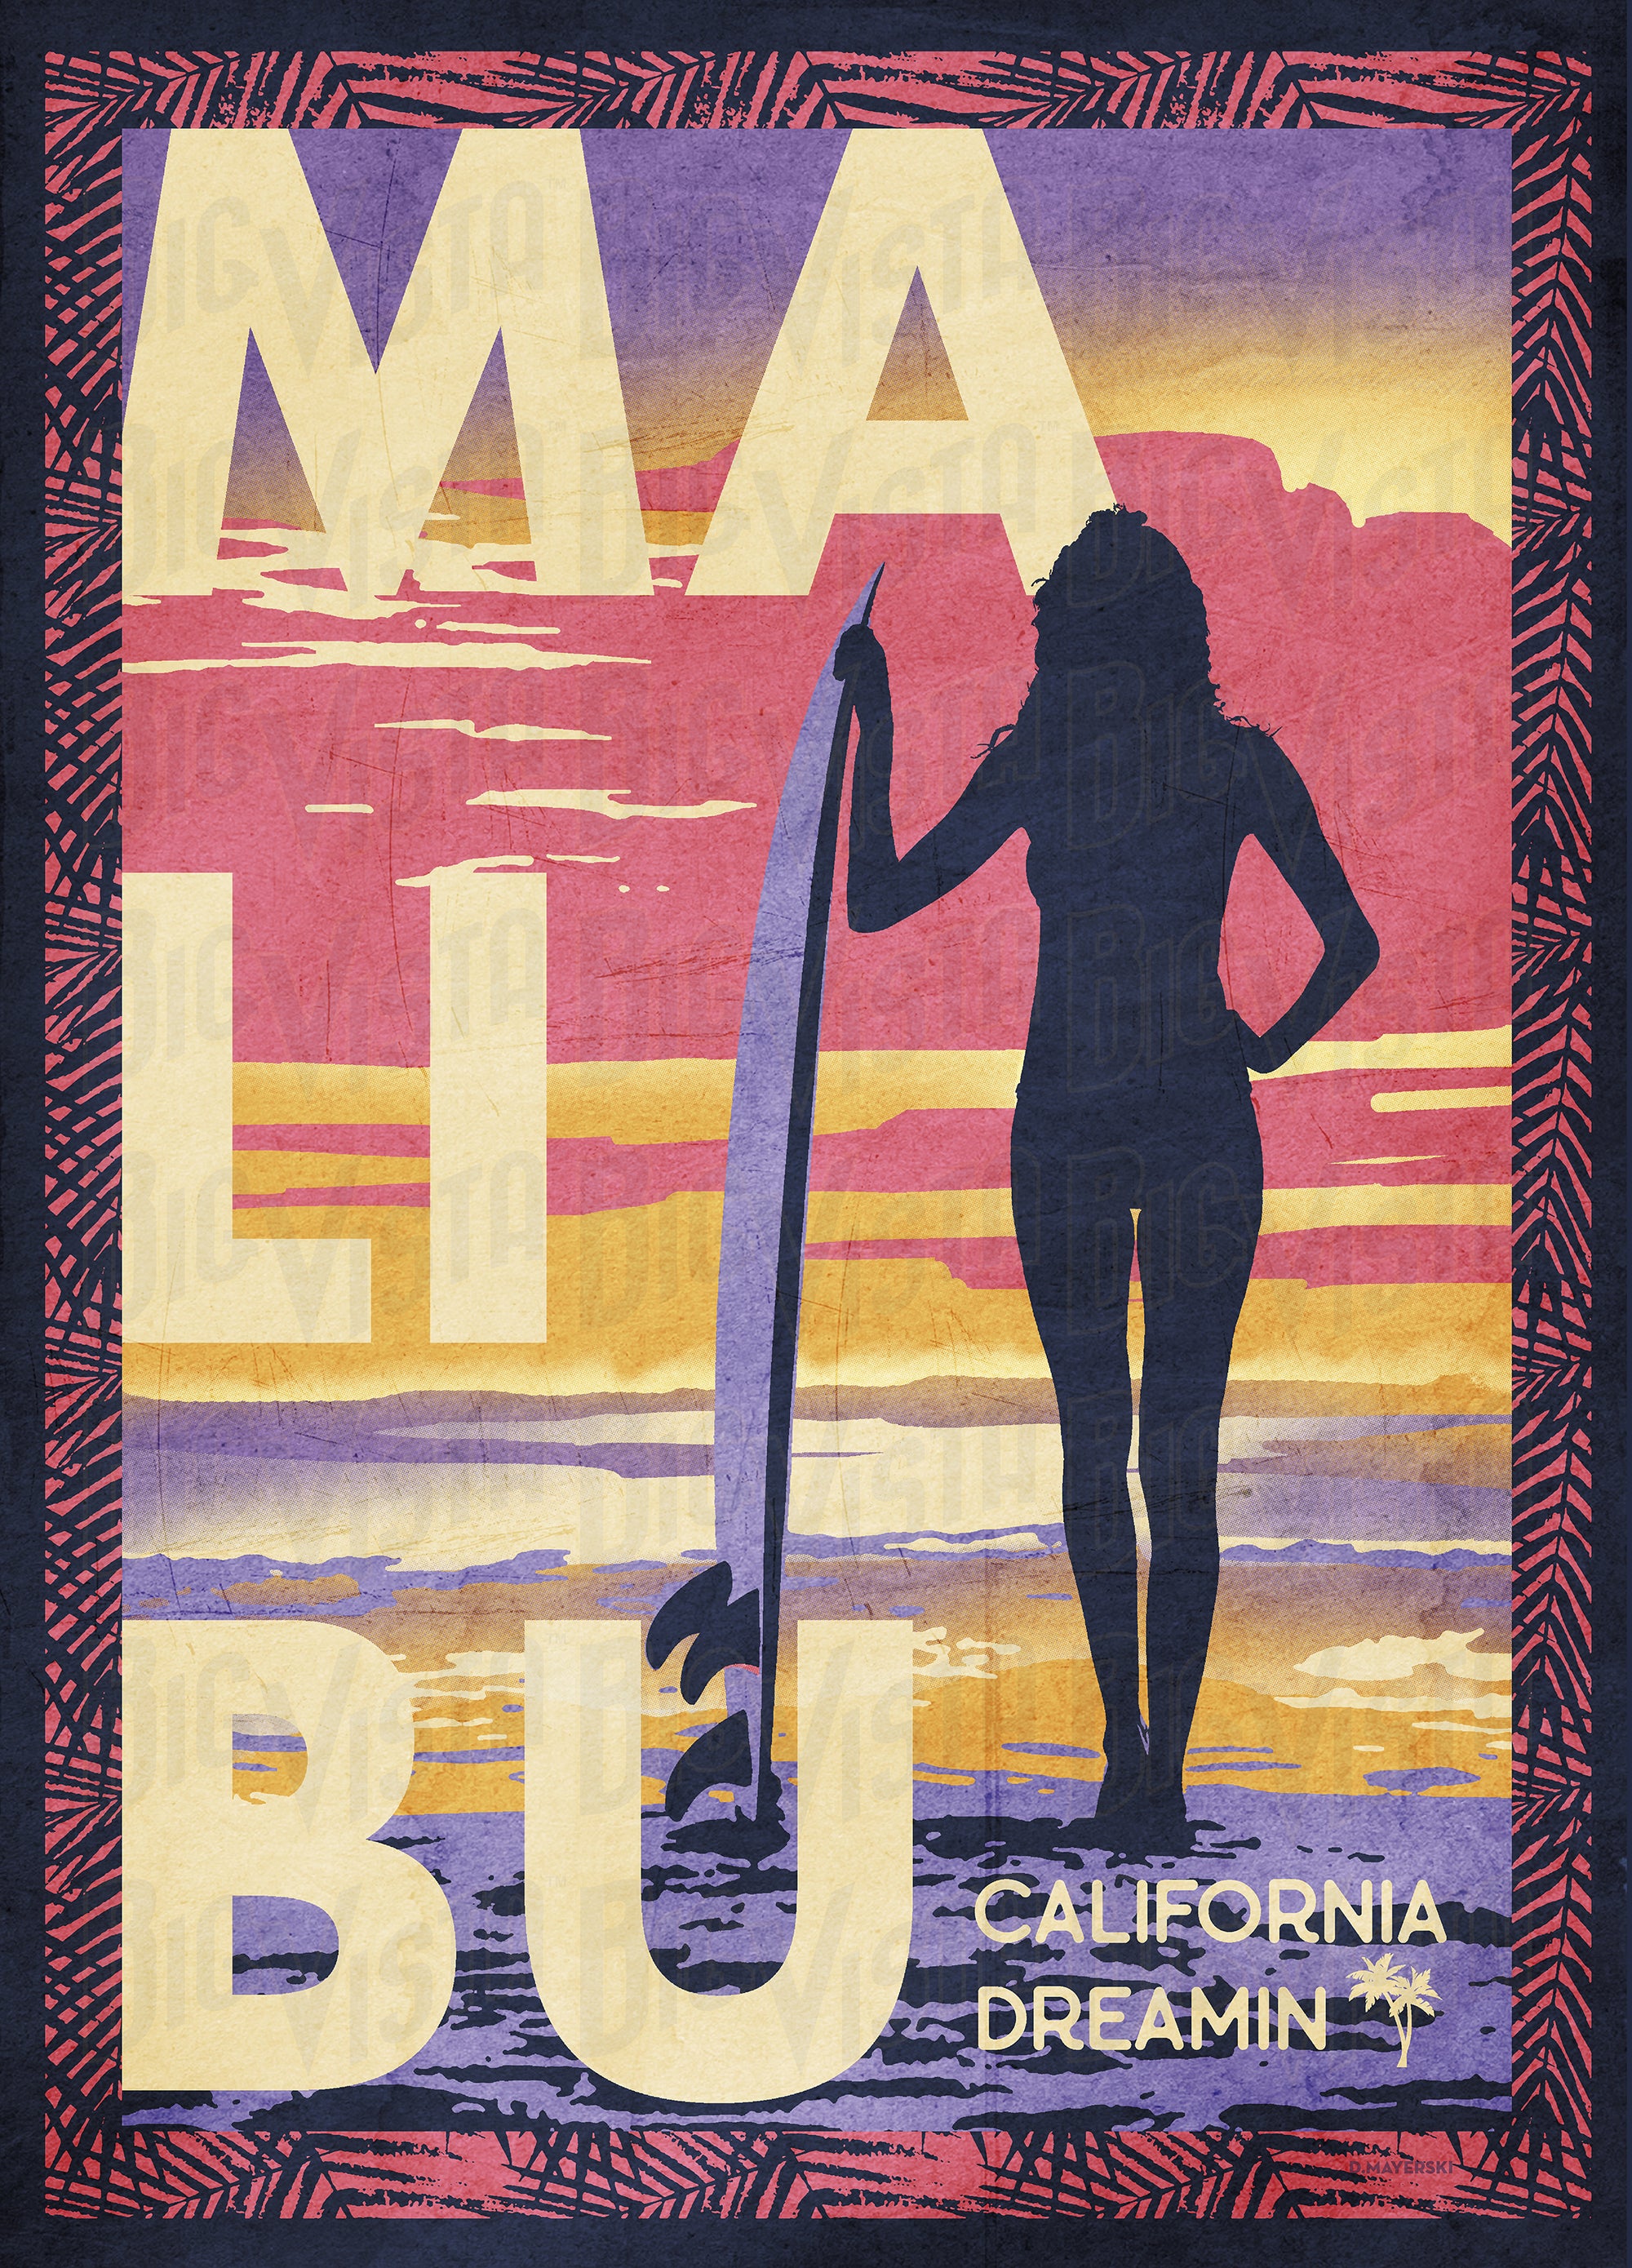 Malibu California Dreaming poster